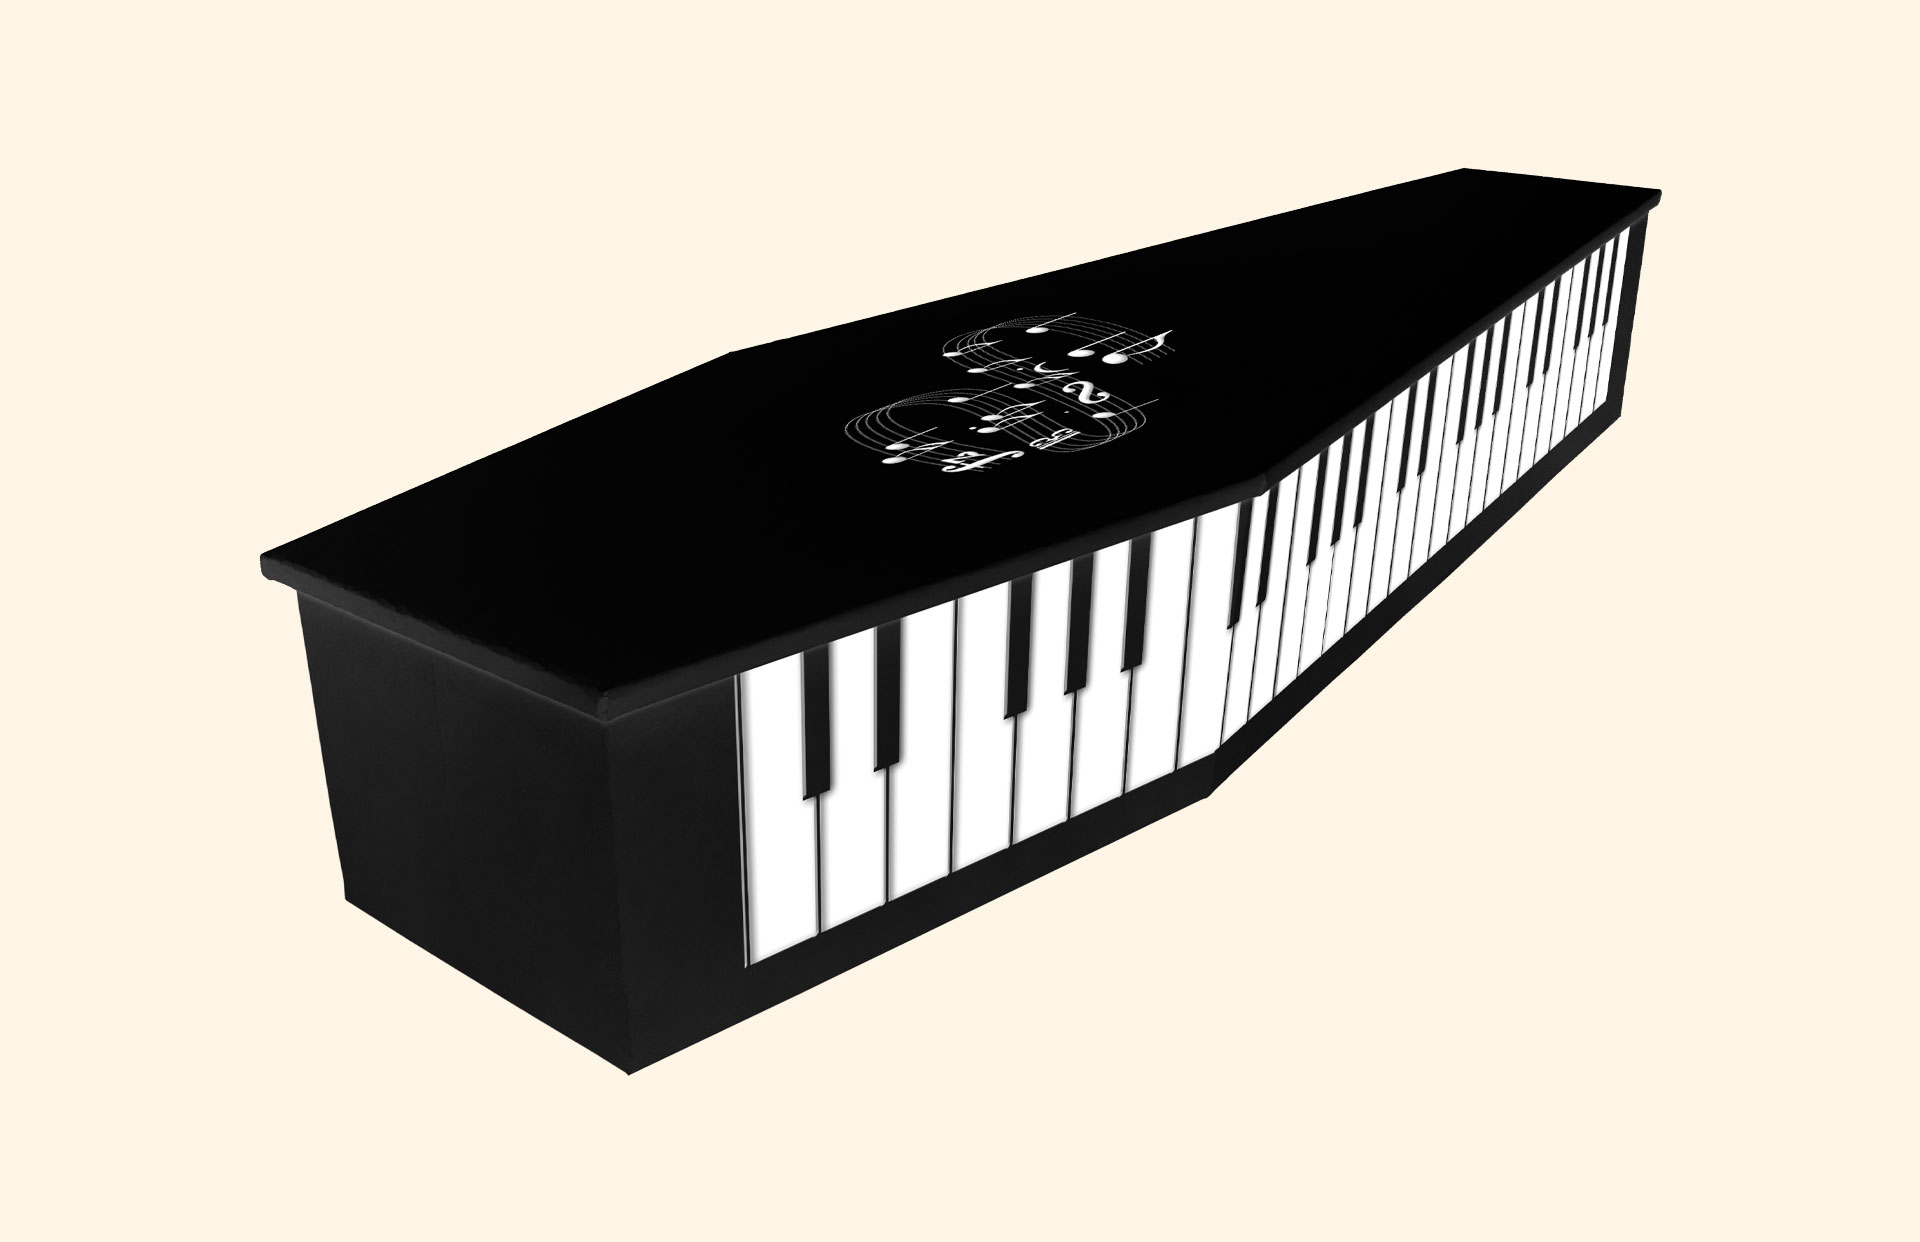 Musical Black design on a cardboard coffin